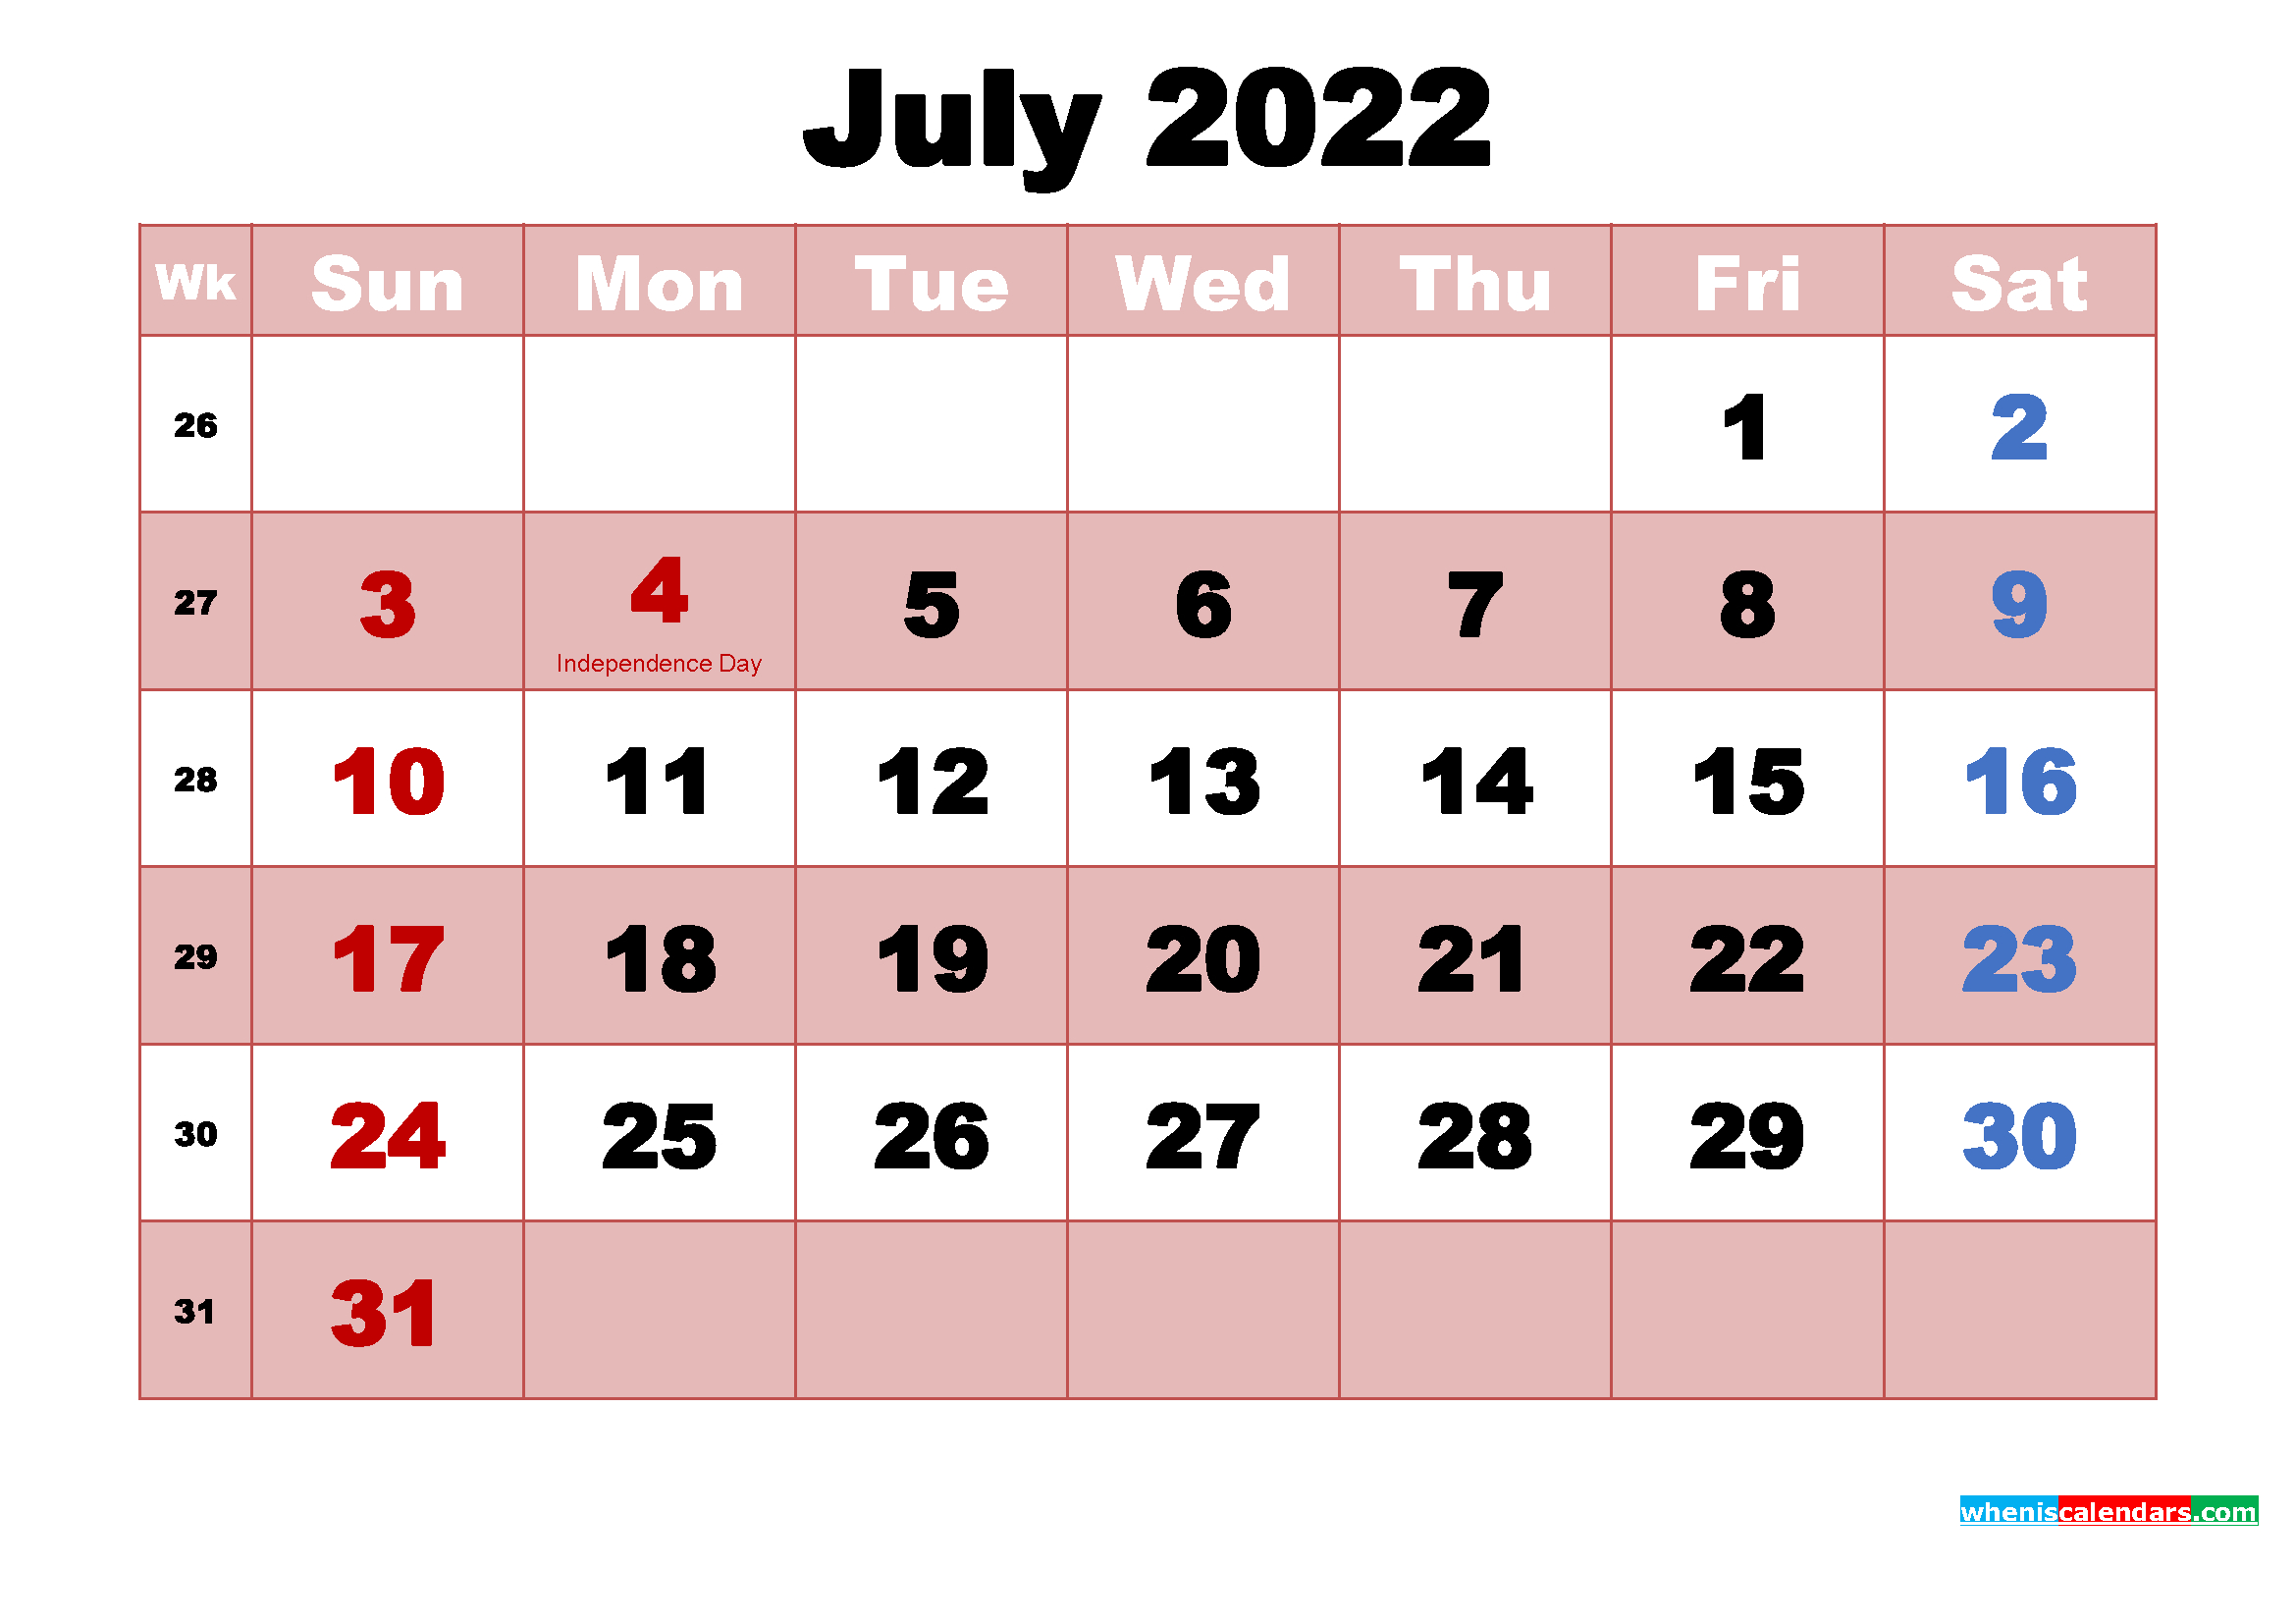 Catch Calendar 2022 July Month